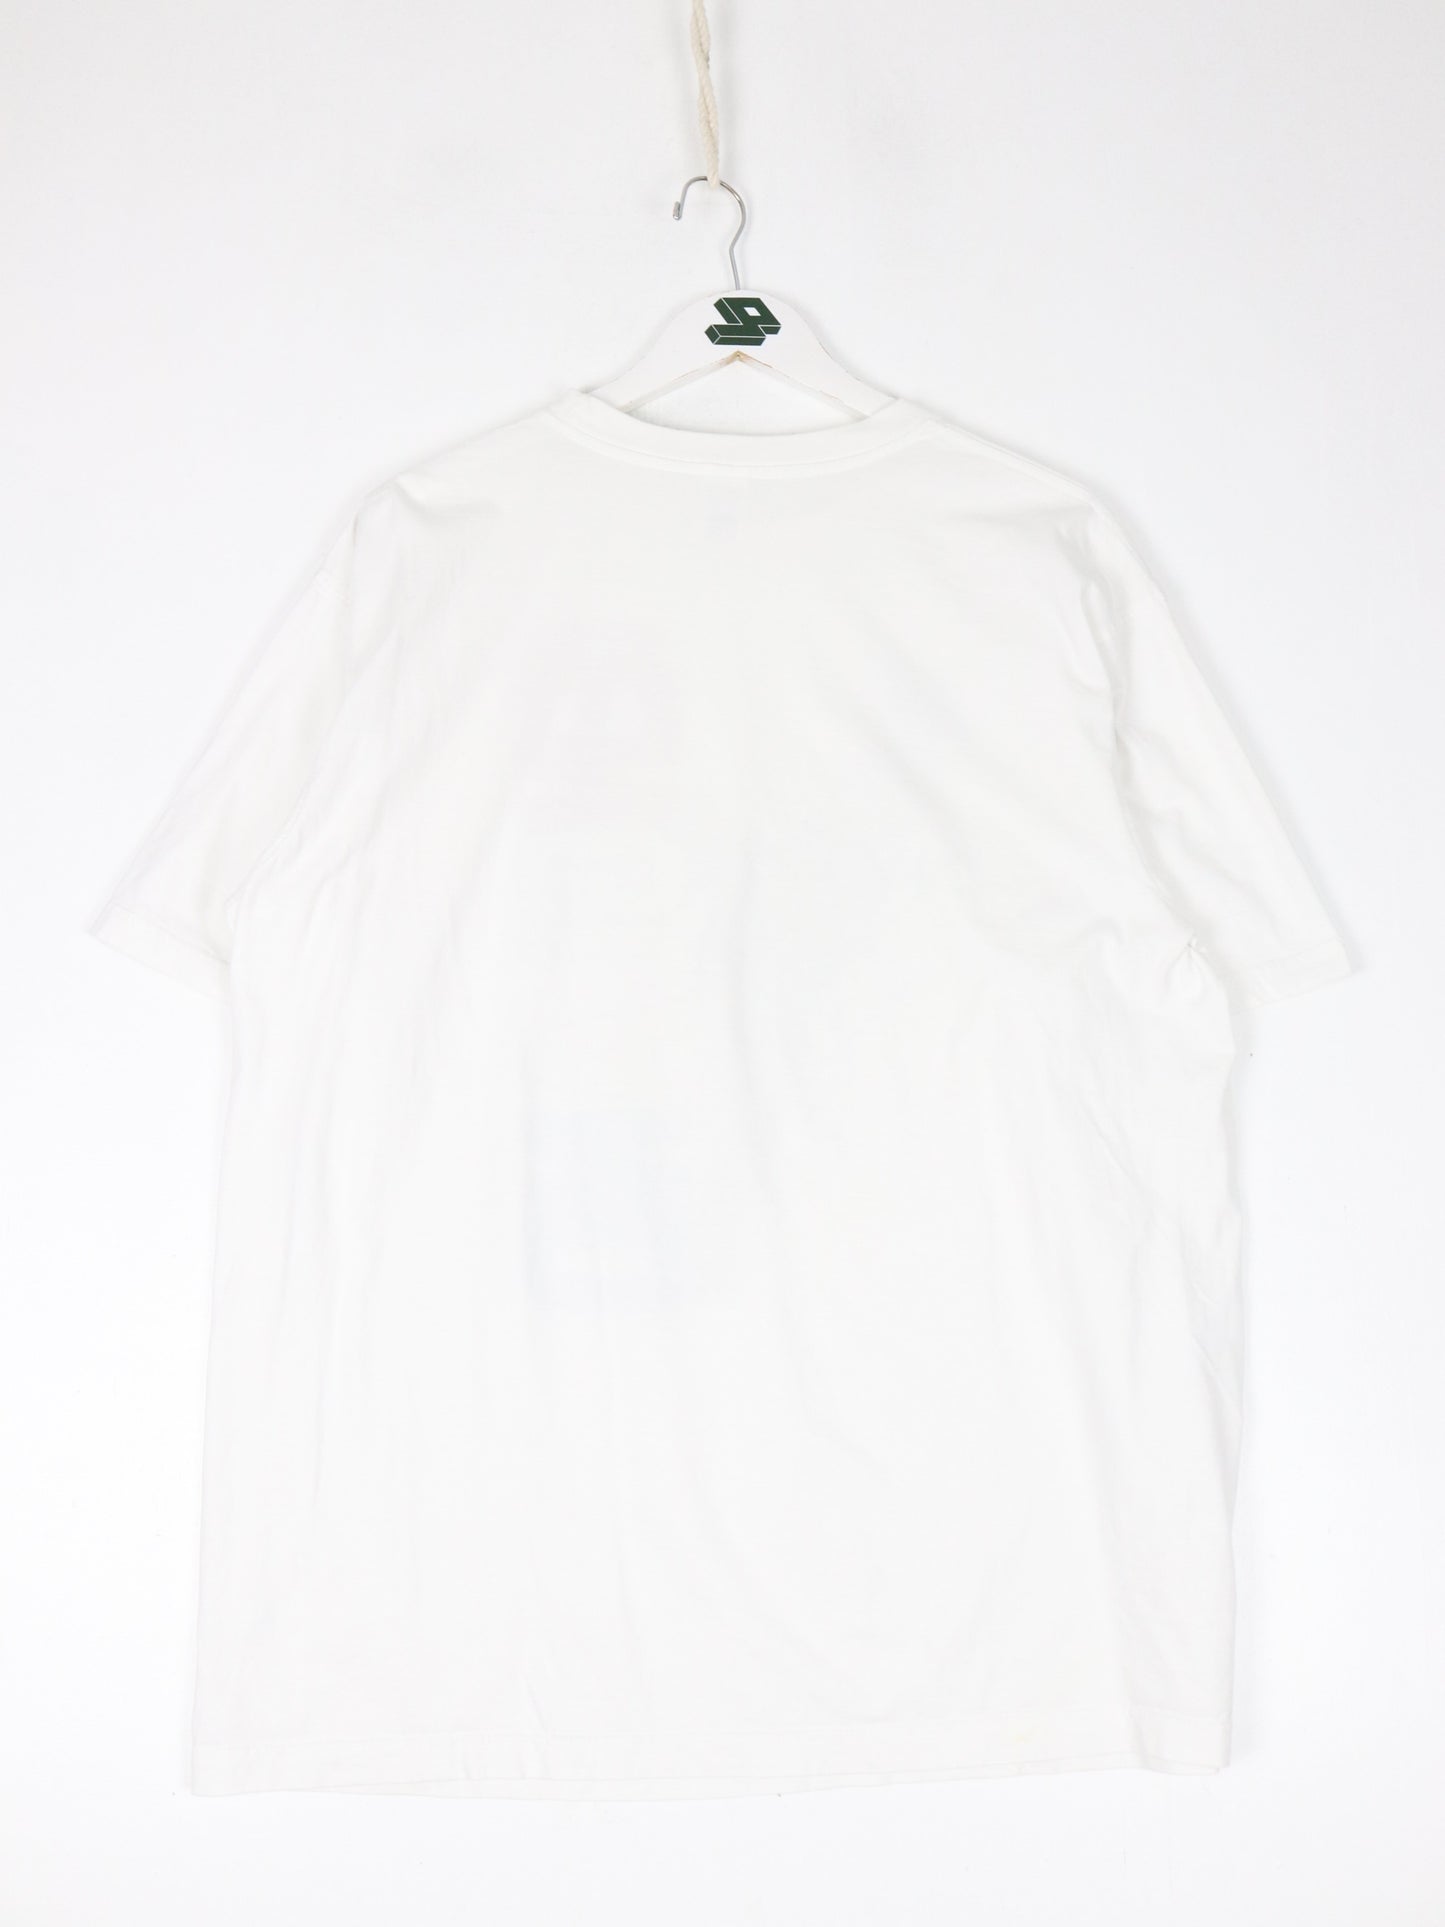 England Soccer T Shirt Mens XL White